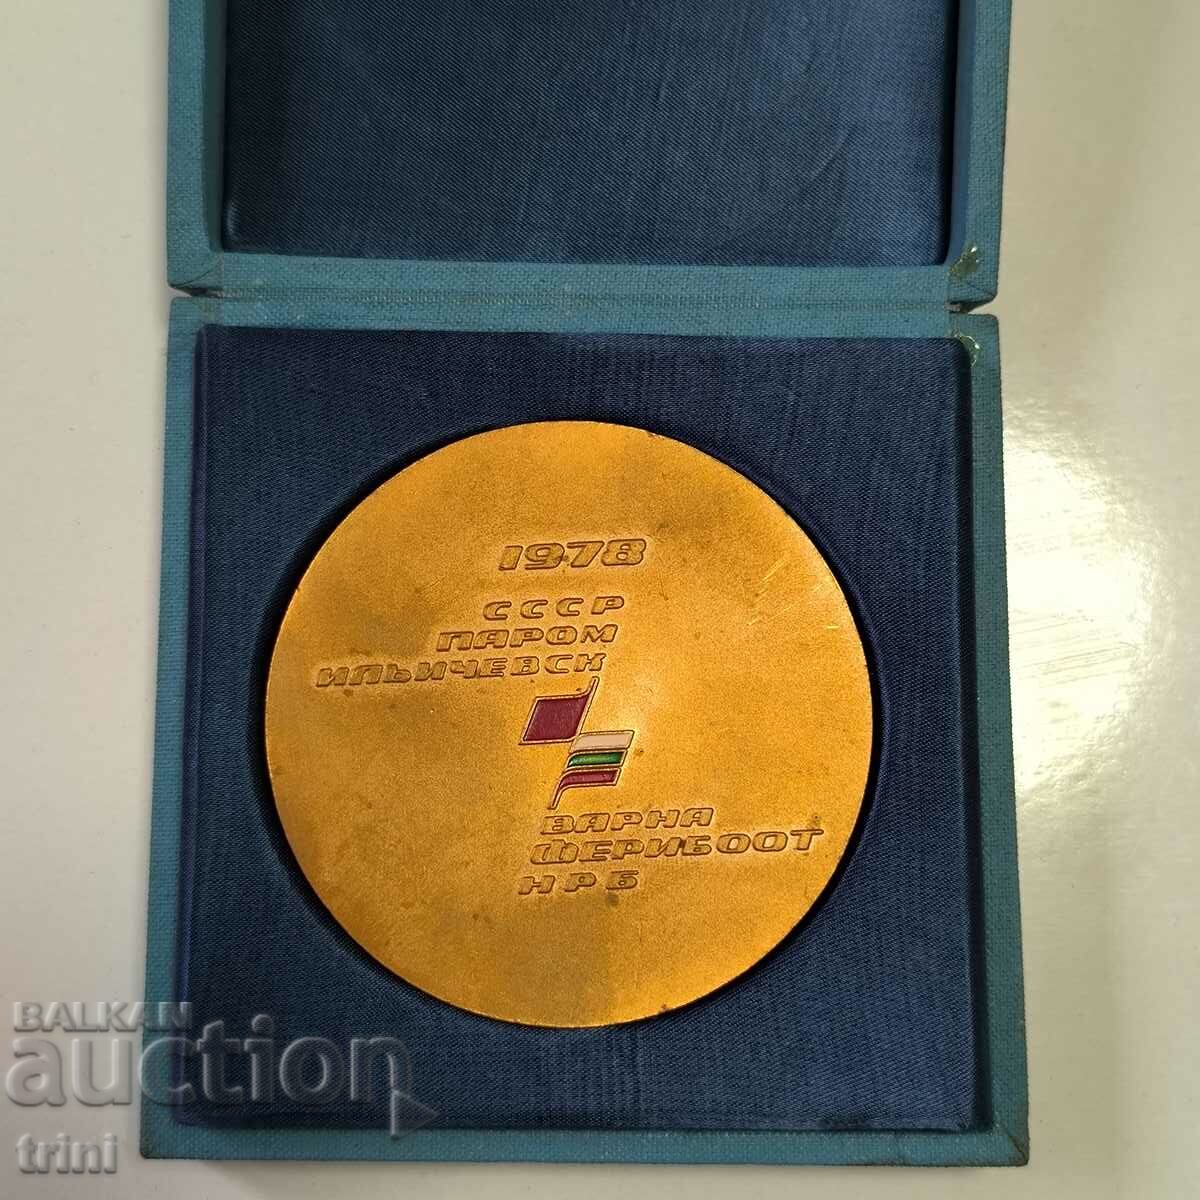 Medalie de masă Ferry Varna - Ilichovsk 1978 Bulgaria